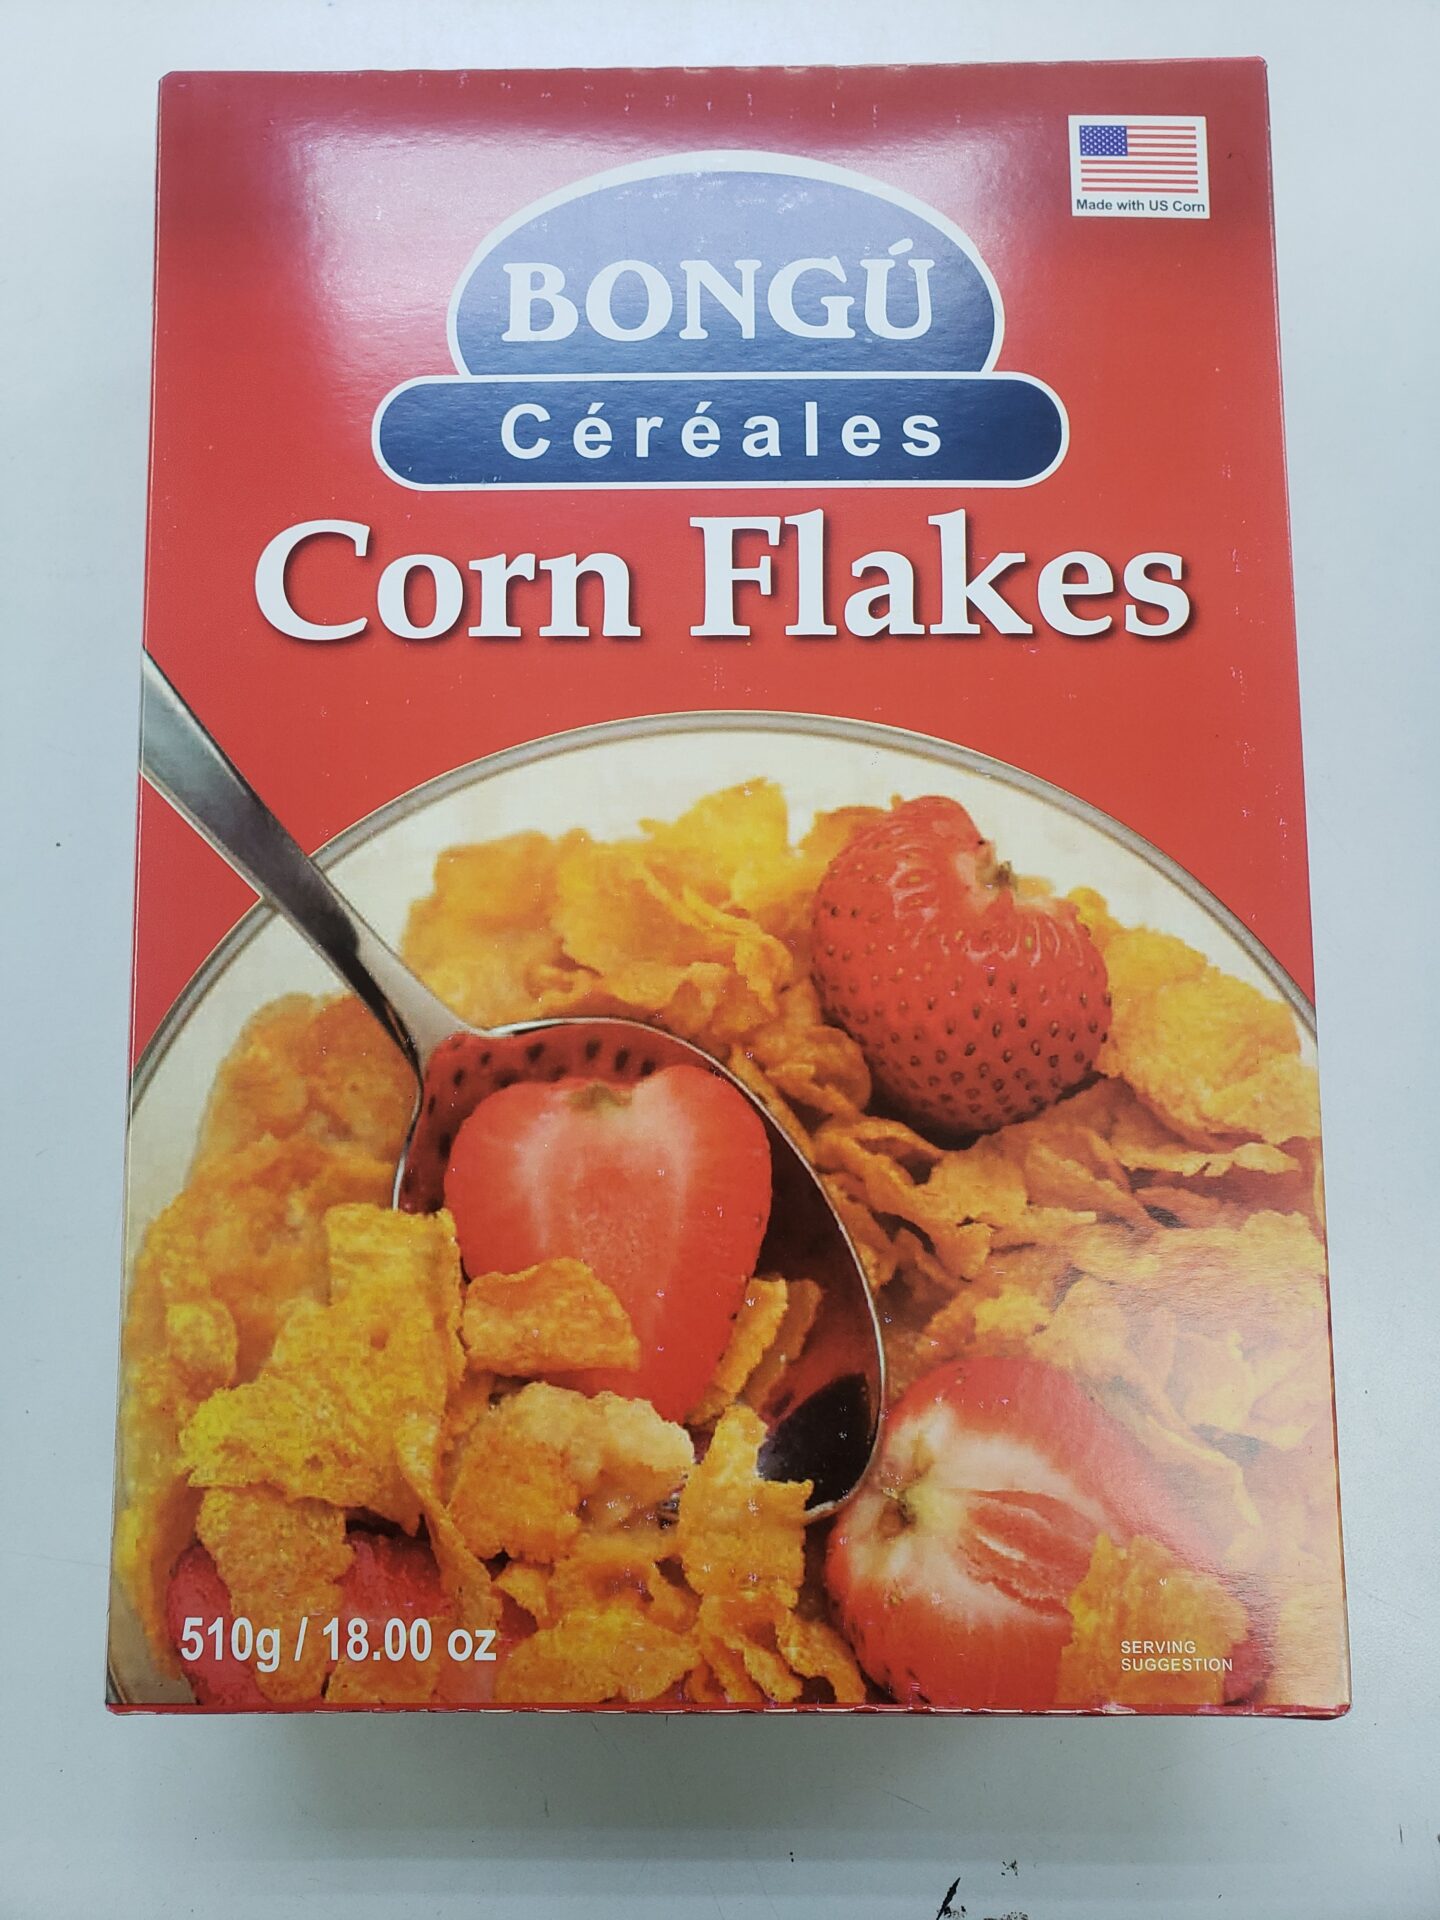 Bongu cereales